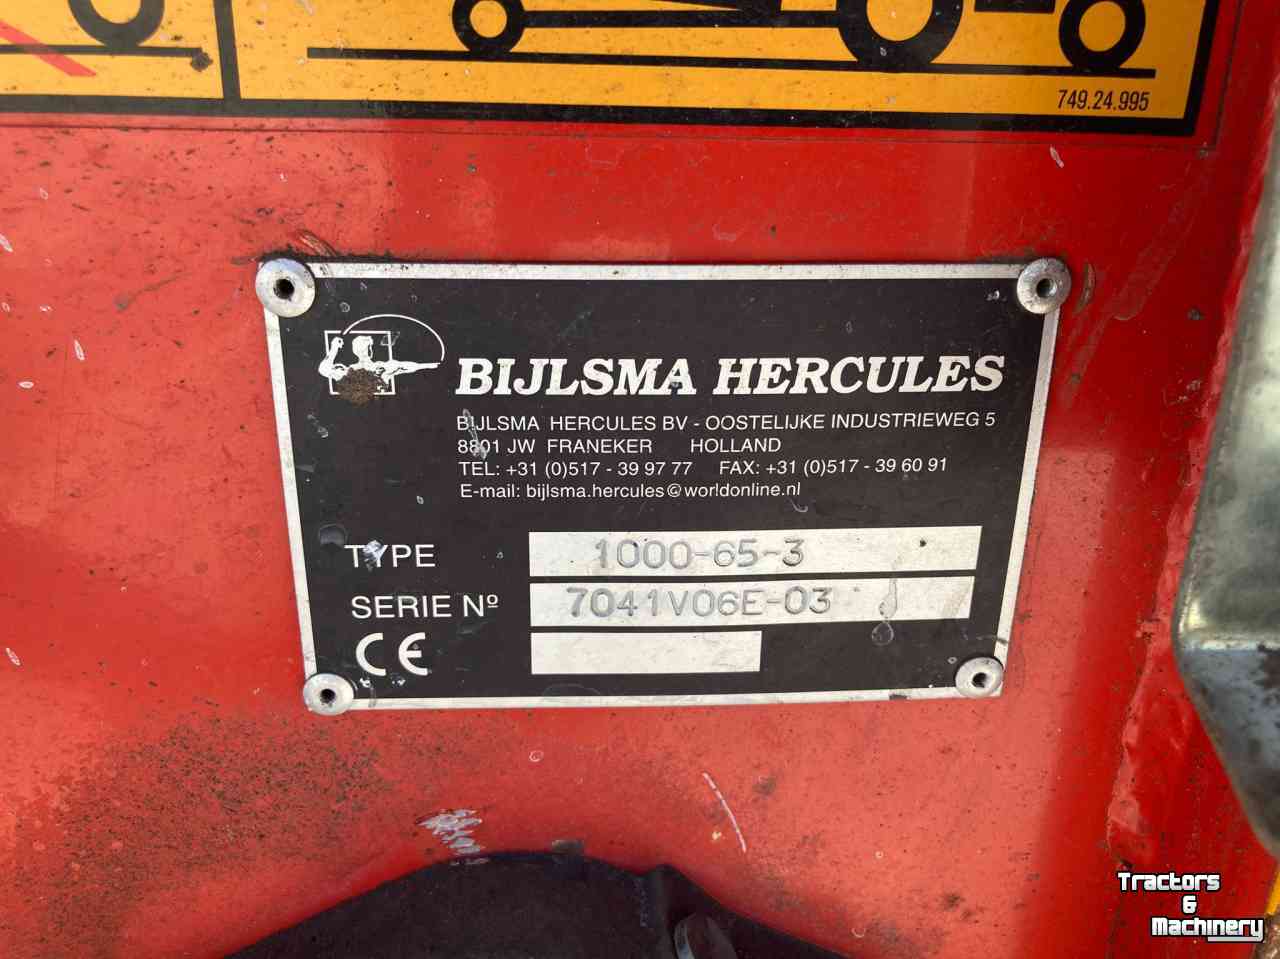 Telescopic storeloader Bijlsma Hercules 1000-65-3